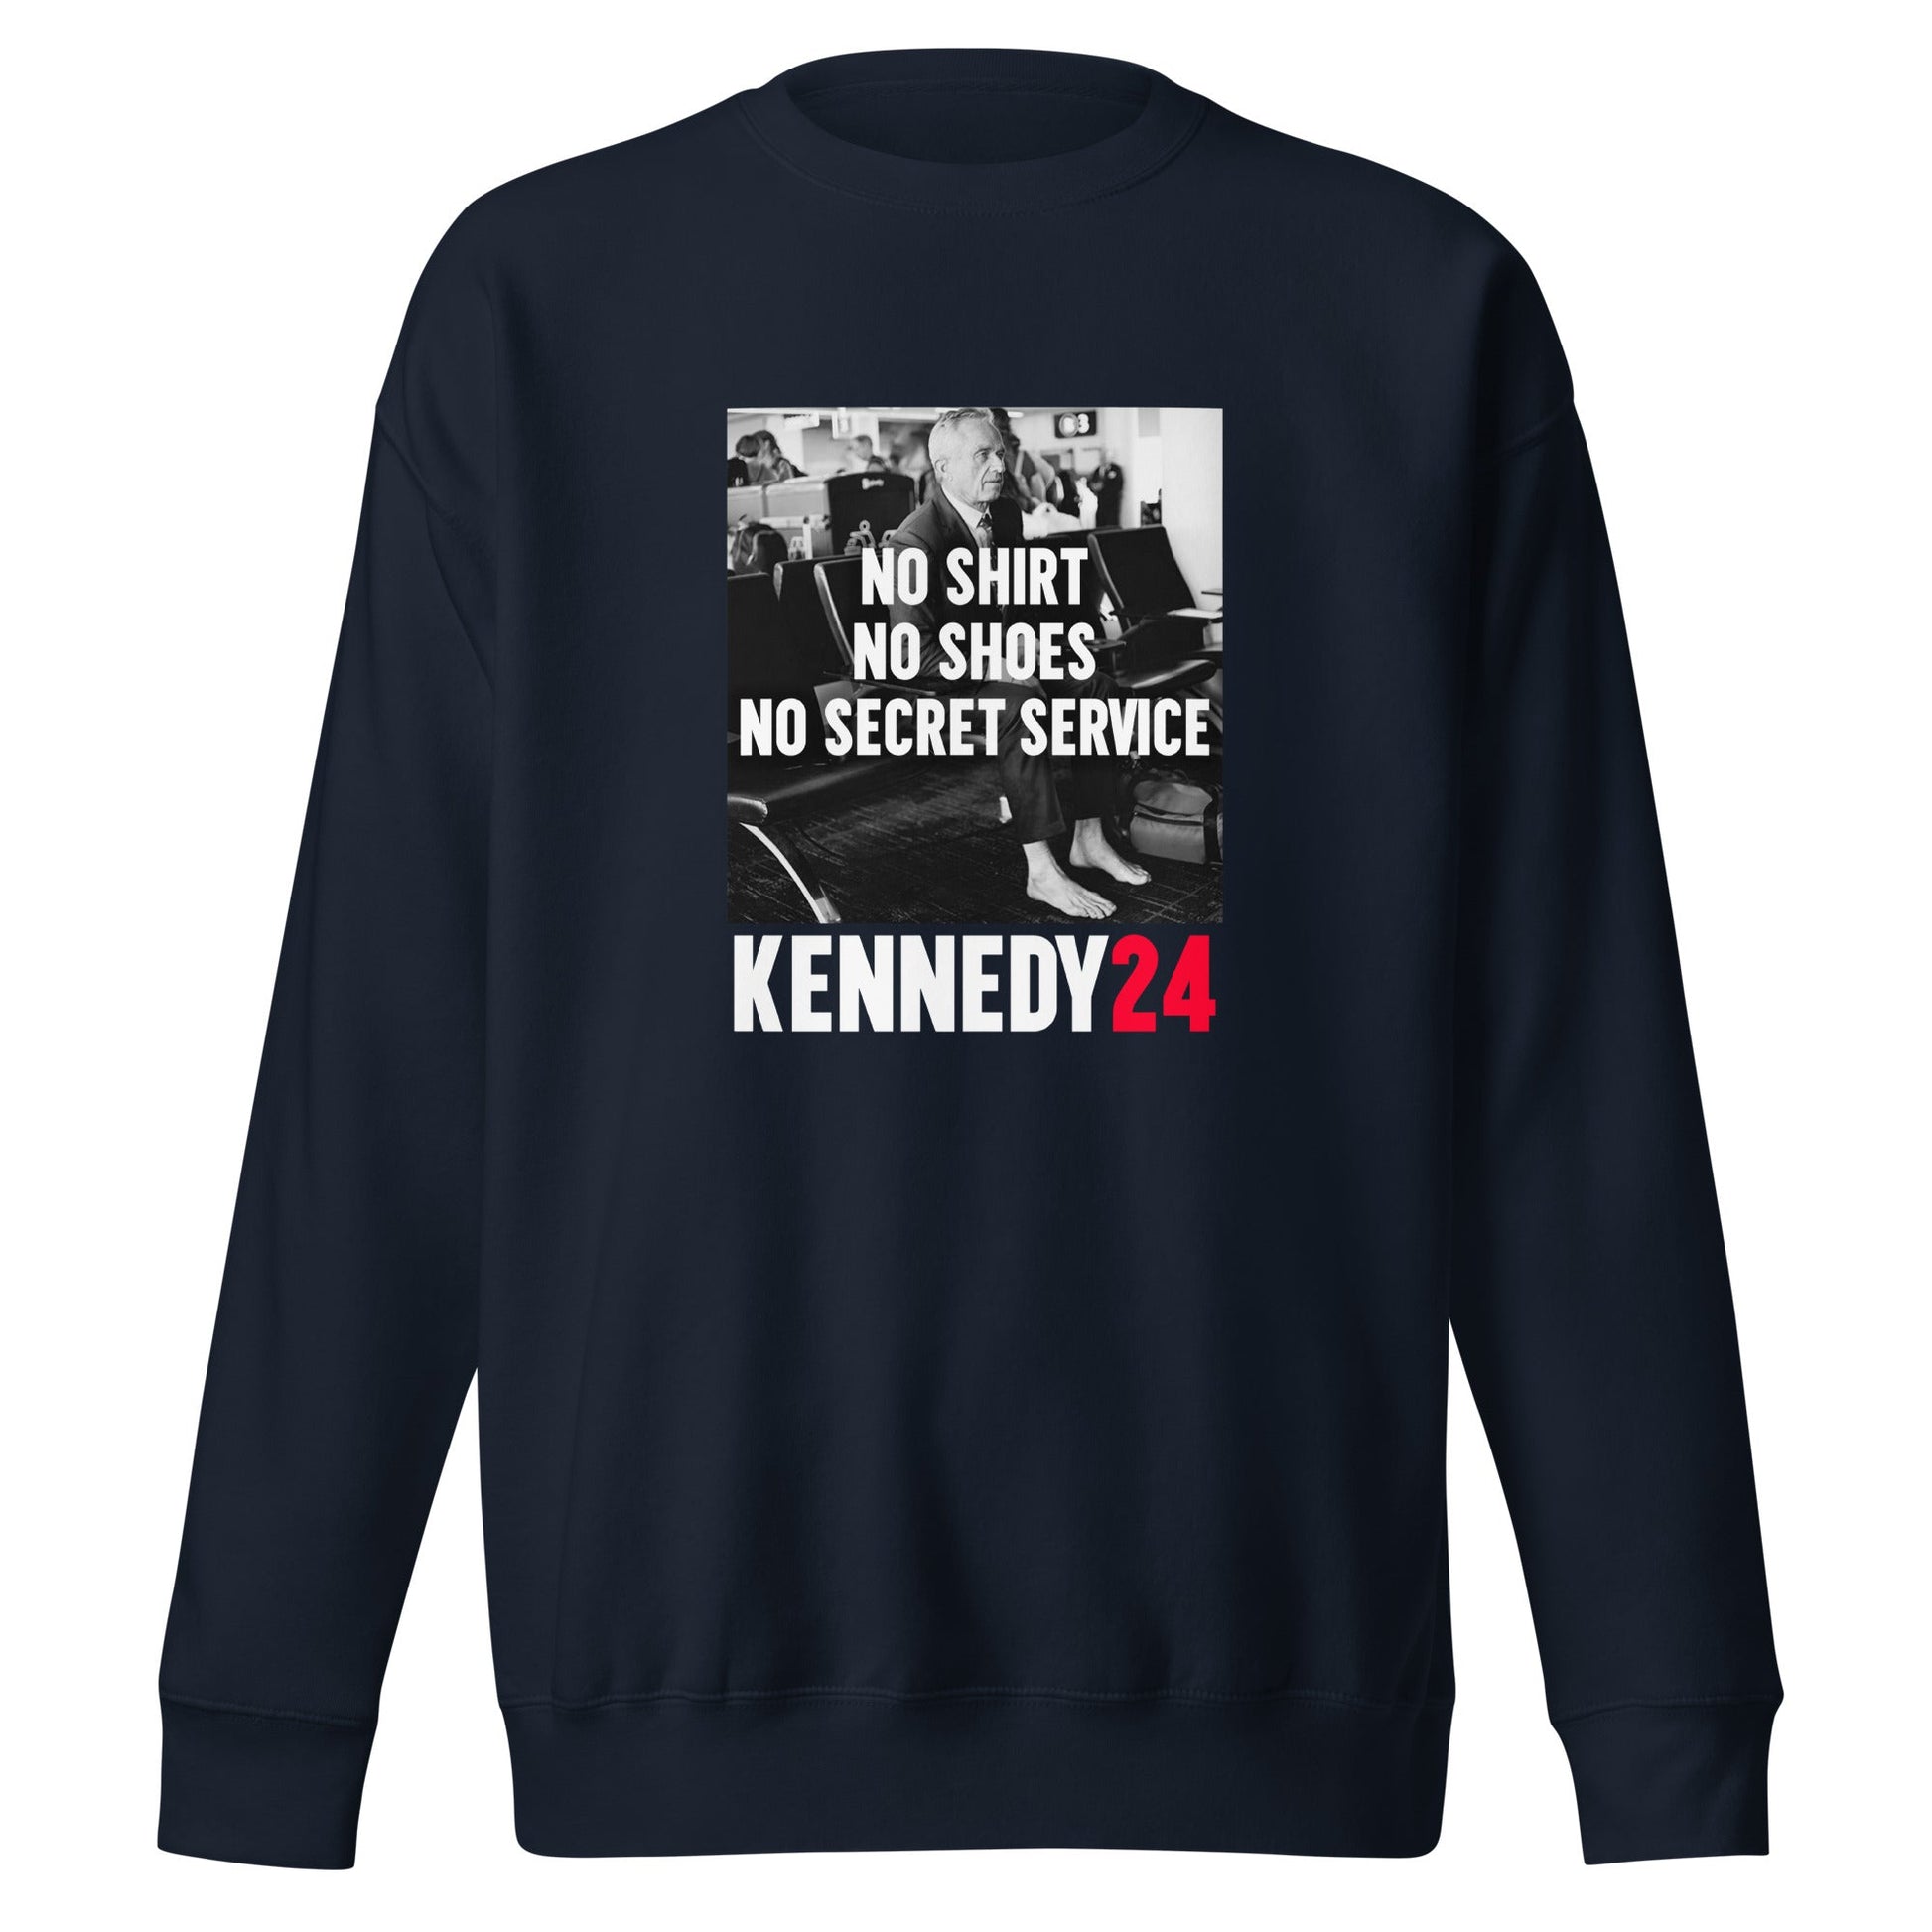 No Shirt, No Shoes, No Secret Service Unisex Premium Sweatshirt - TEAM KENNEDY. All rights reserved